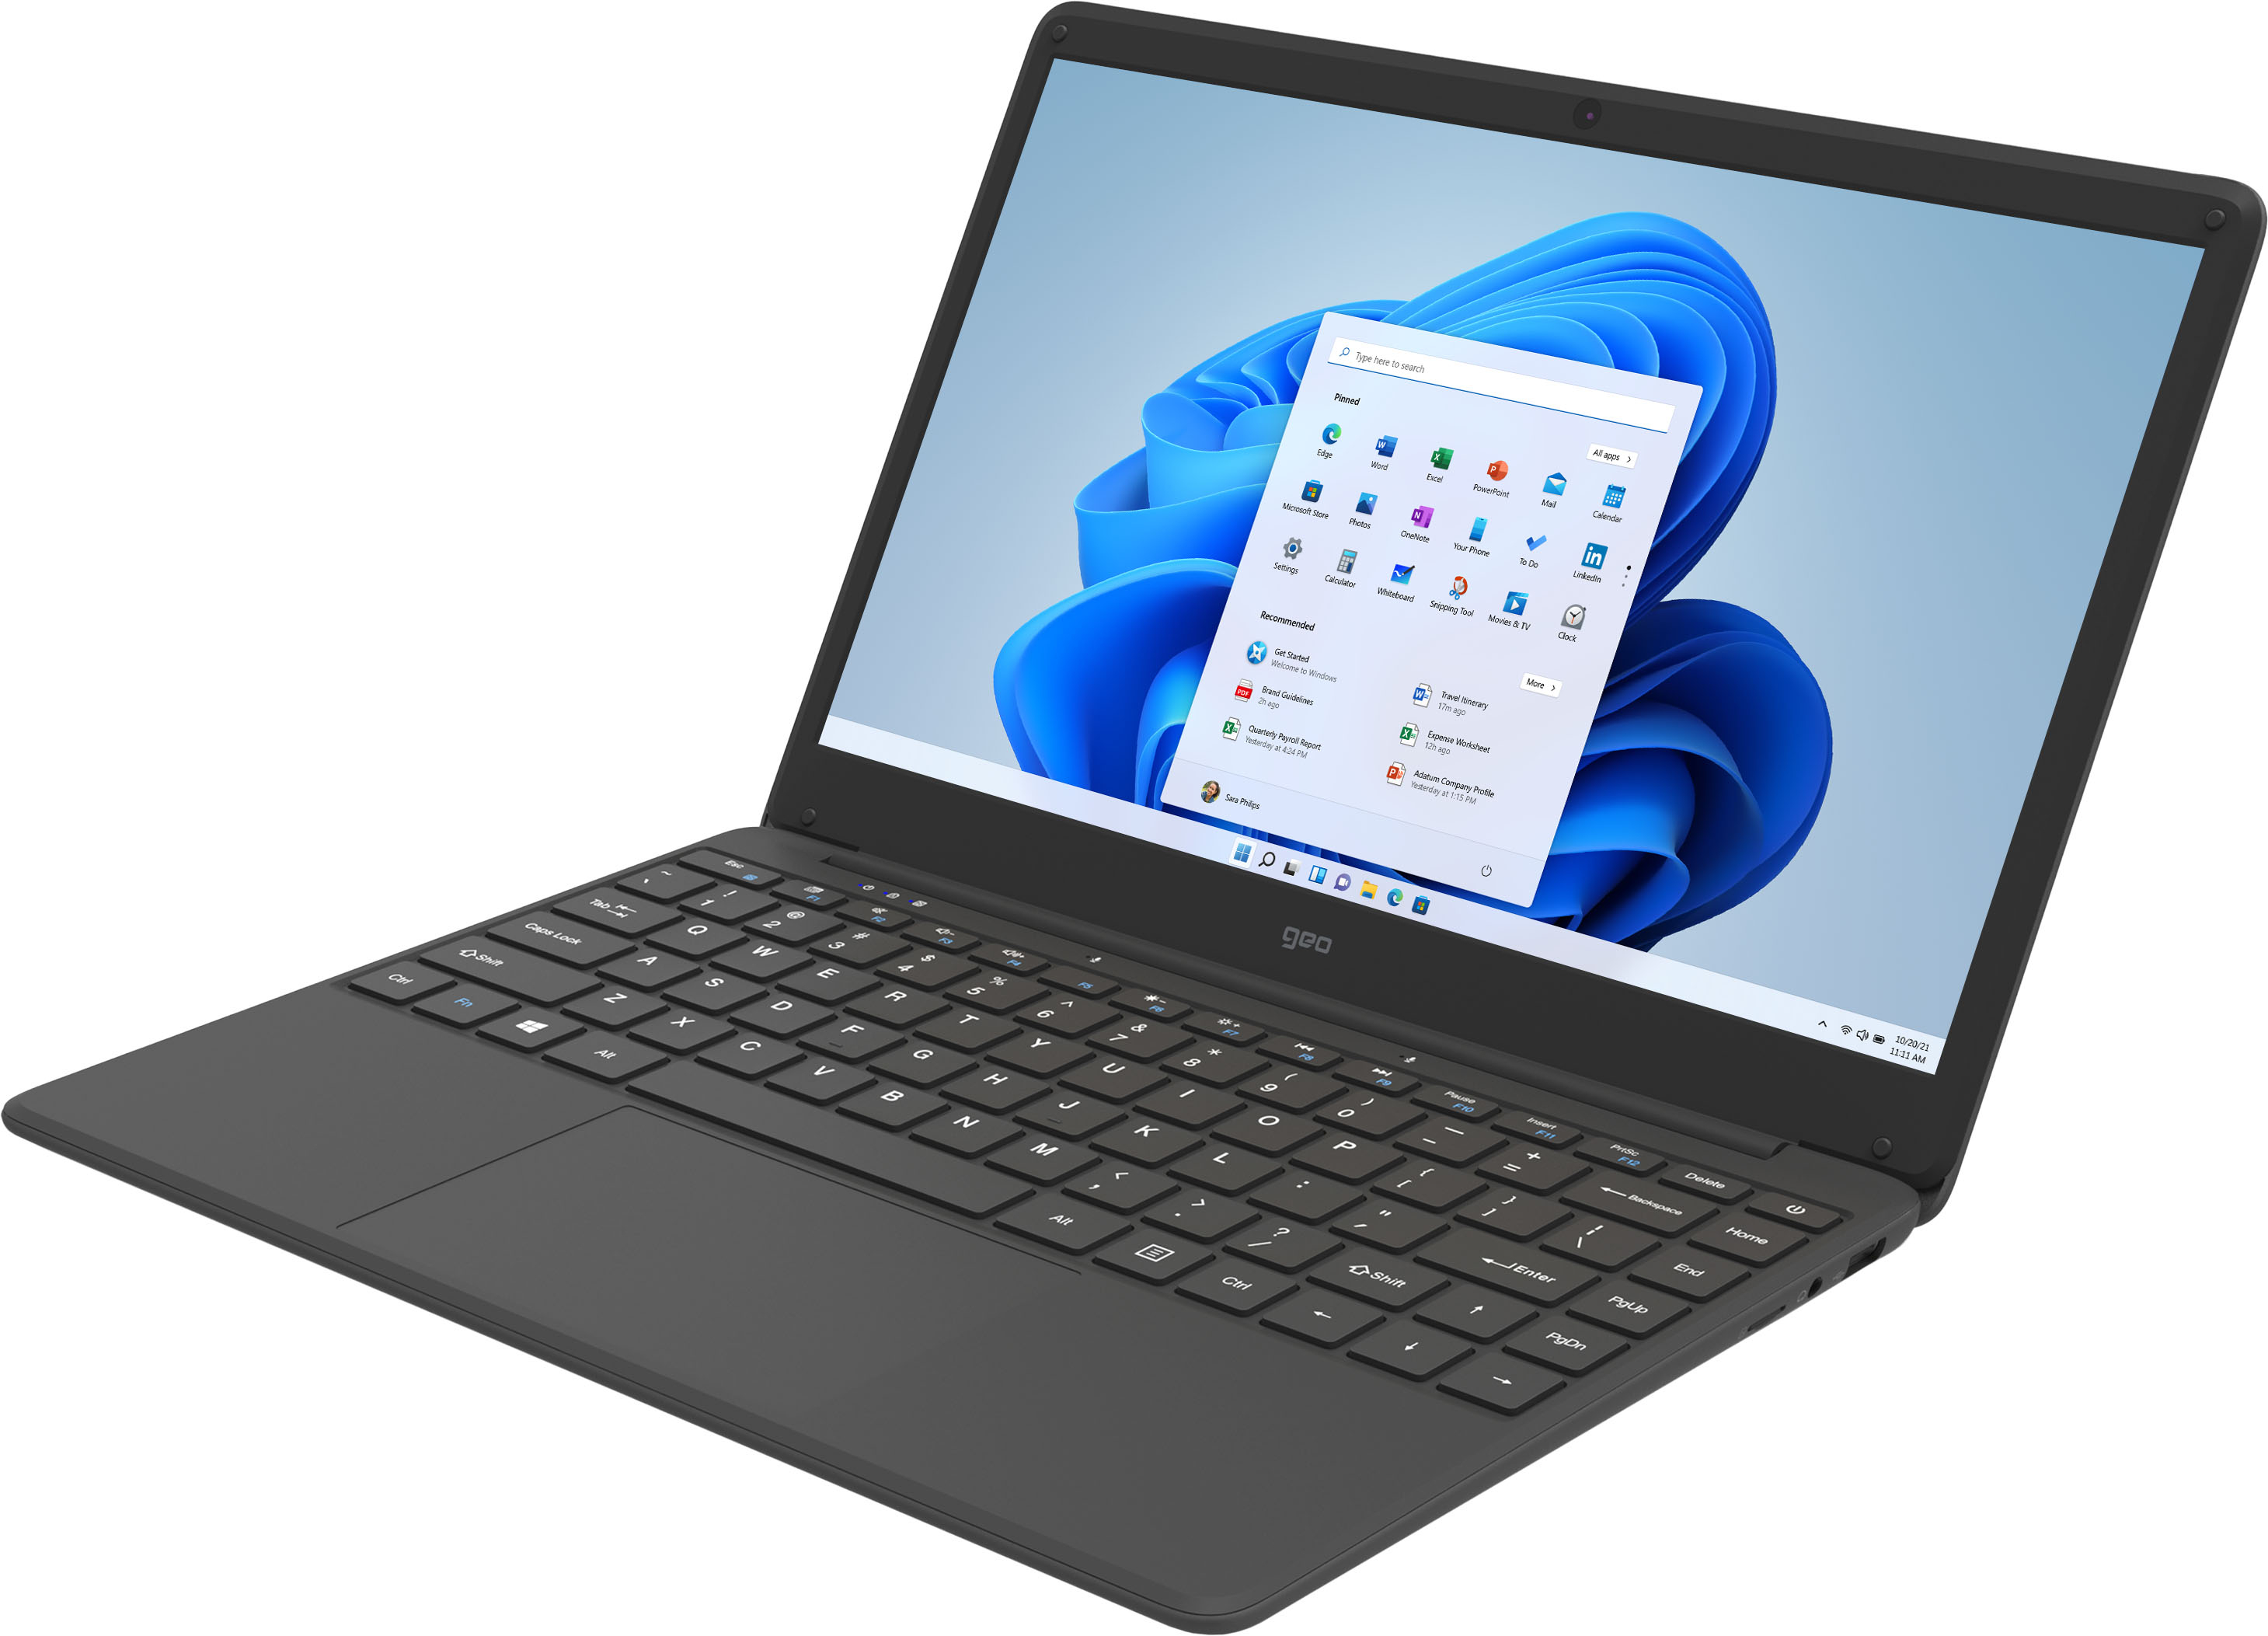 Geo - GeoBook 240 14.1-inch FHD Laptop - 8GB Memory - 128GB SSD - Black $229.99 + tax at Best Buy